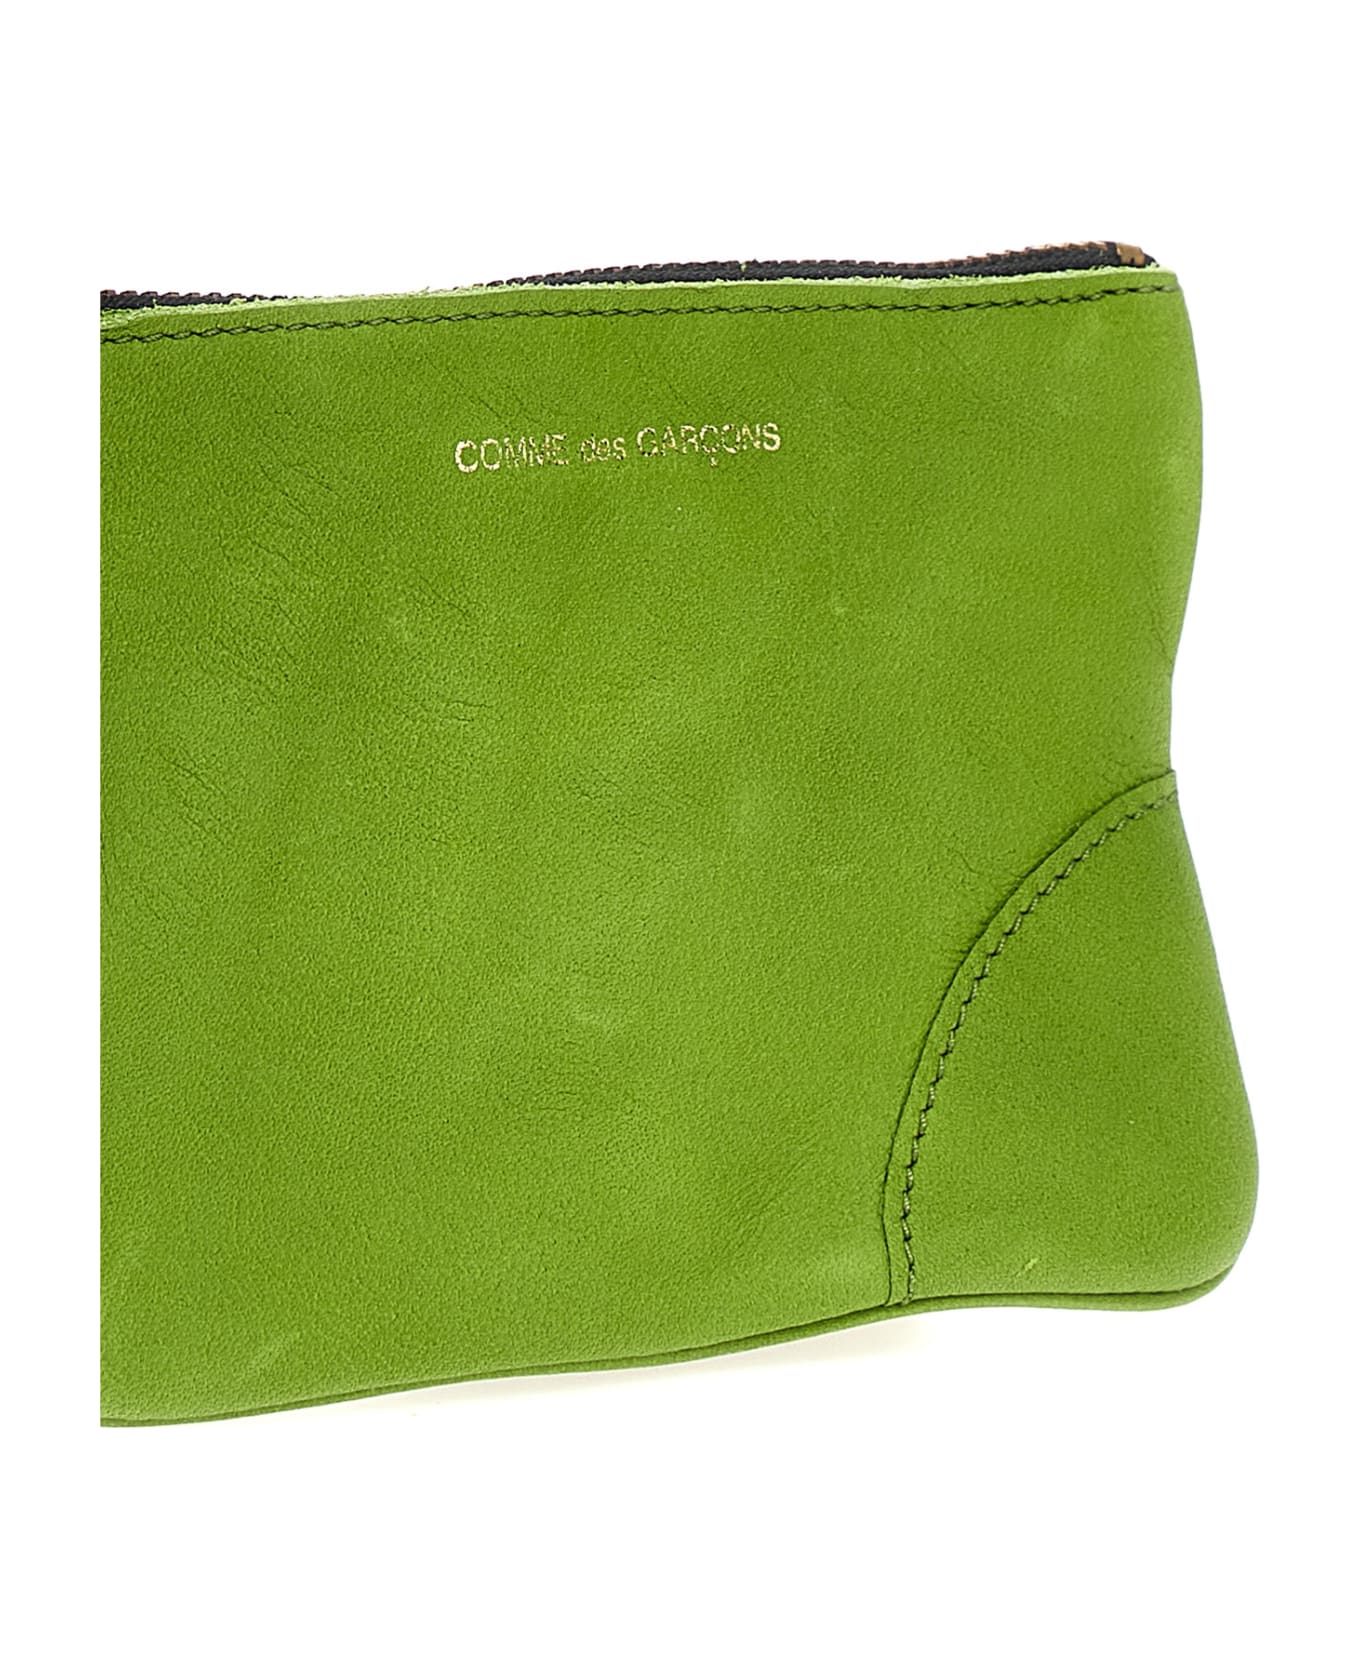 Comme des Garçons Wallet 'washed' Wallet - Green 財布